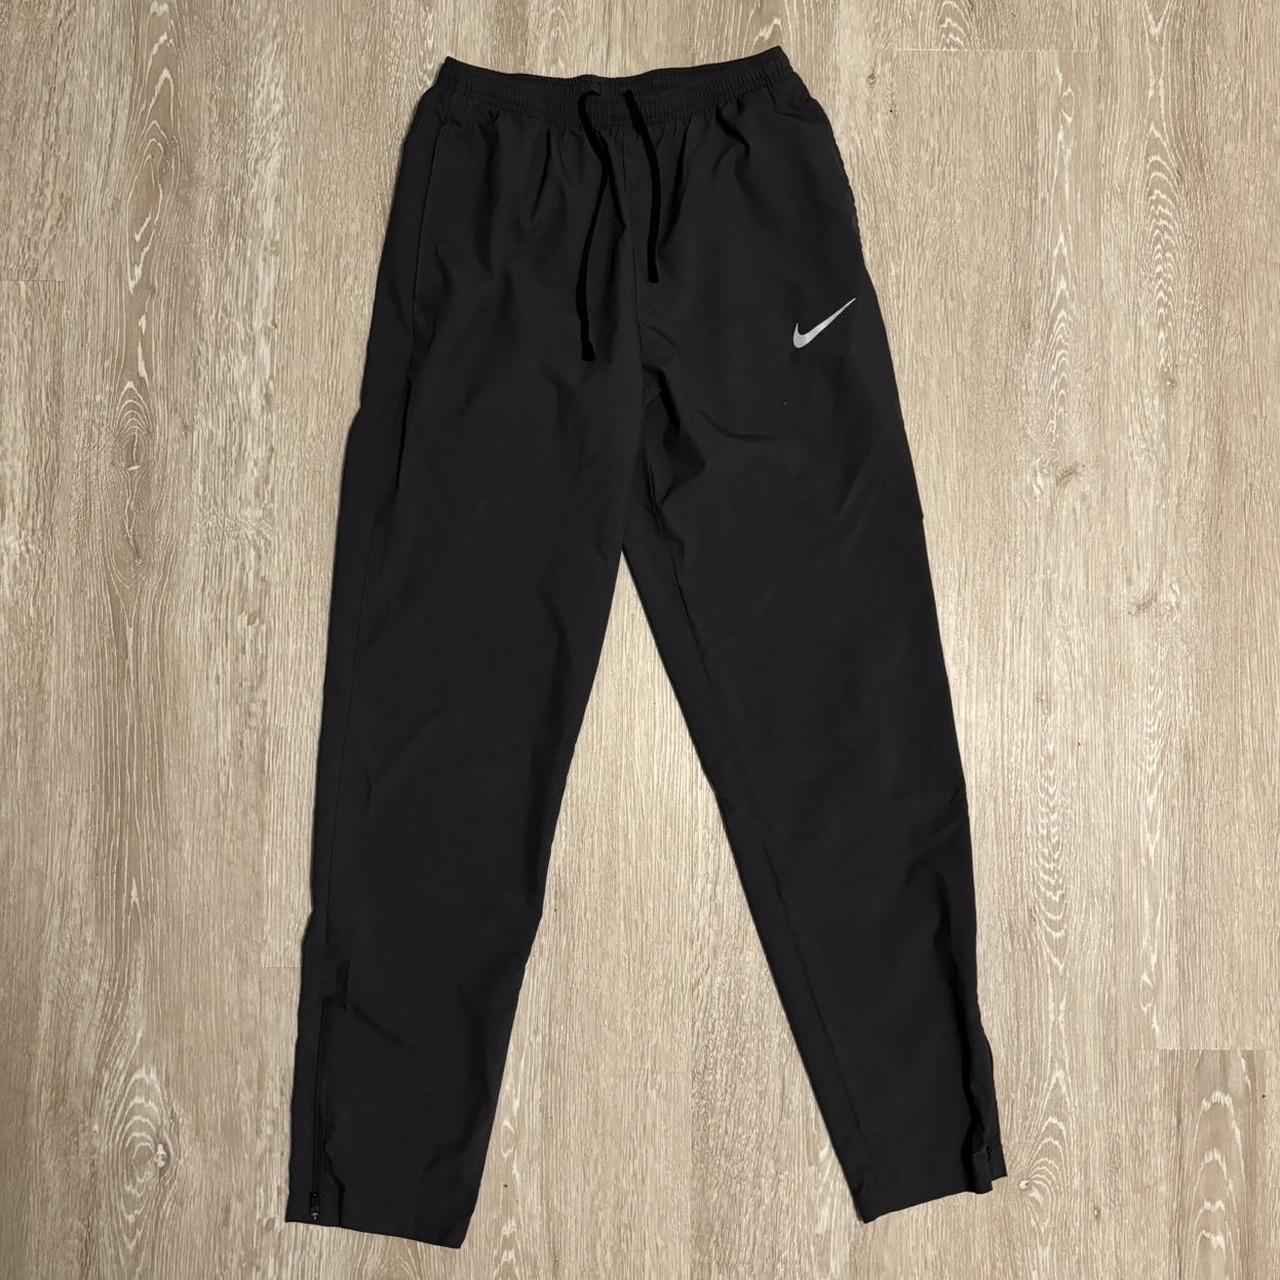 Grey Nike Mesh Sweatpants Excellent Quality Size:... - Depop